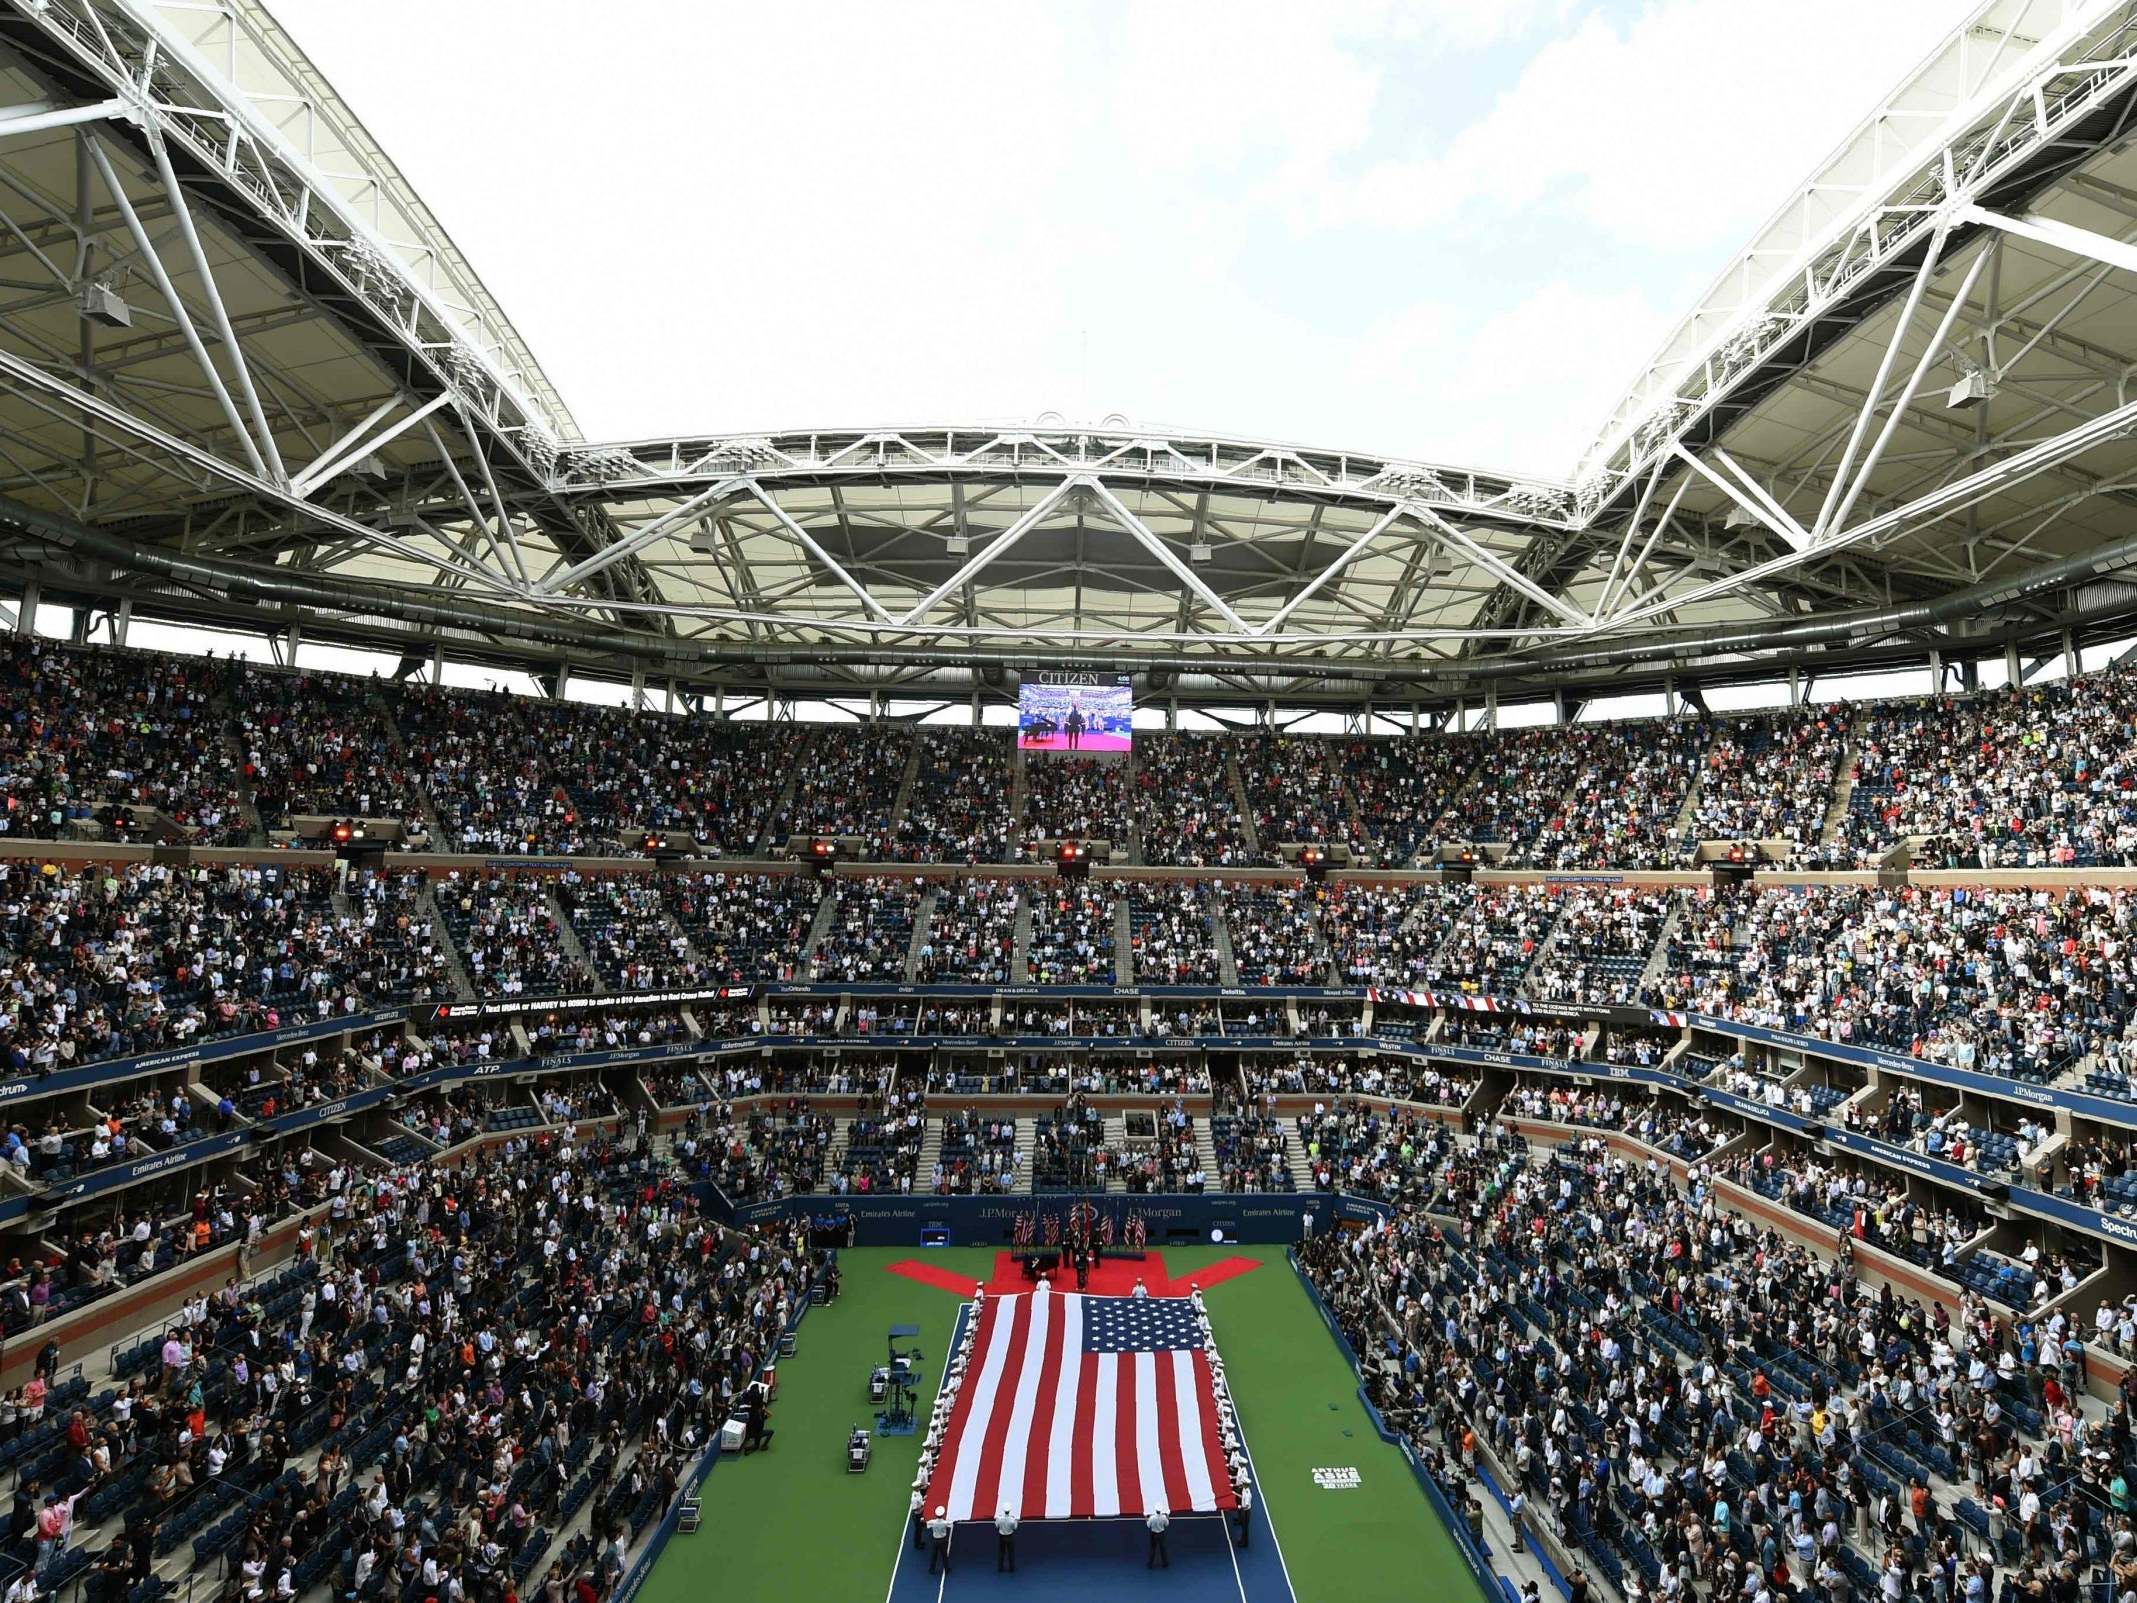 Coronavirus lockdown: Entire tennis season may be over, says Wimbledon chief Richard Lewis